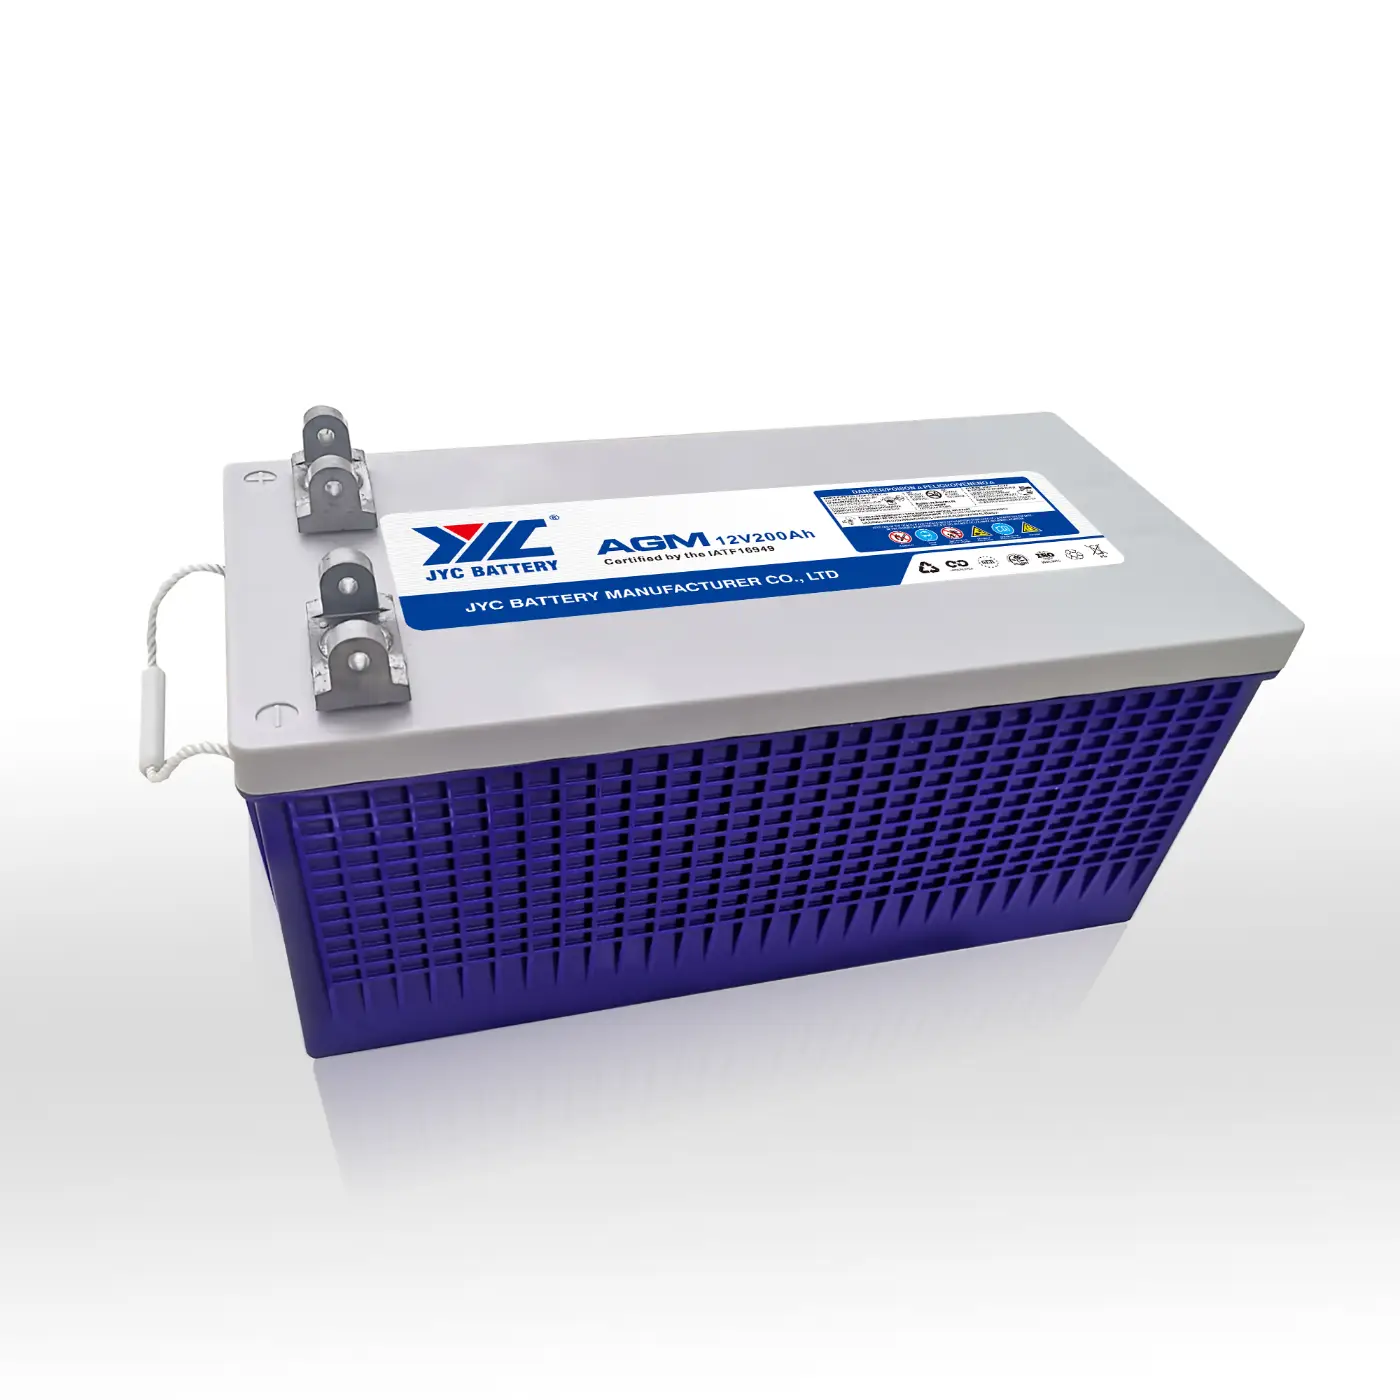 Lkw-Batterie - JYC Battery